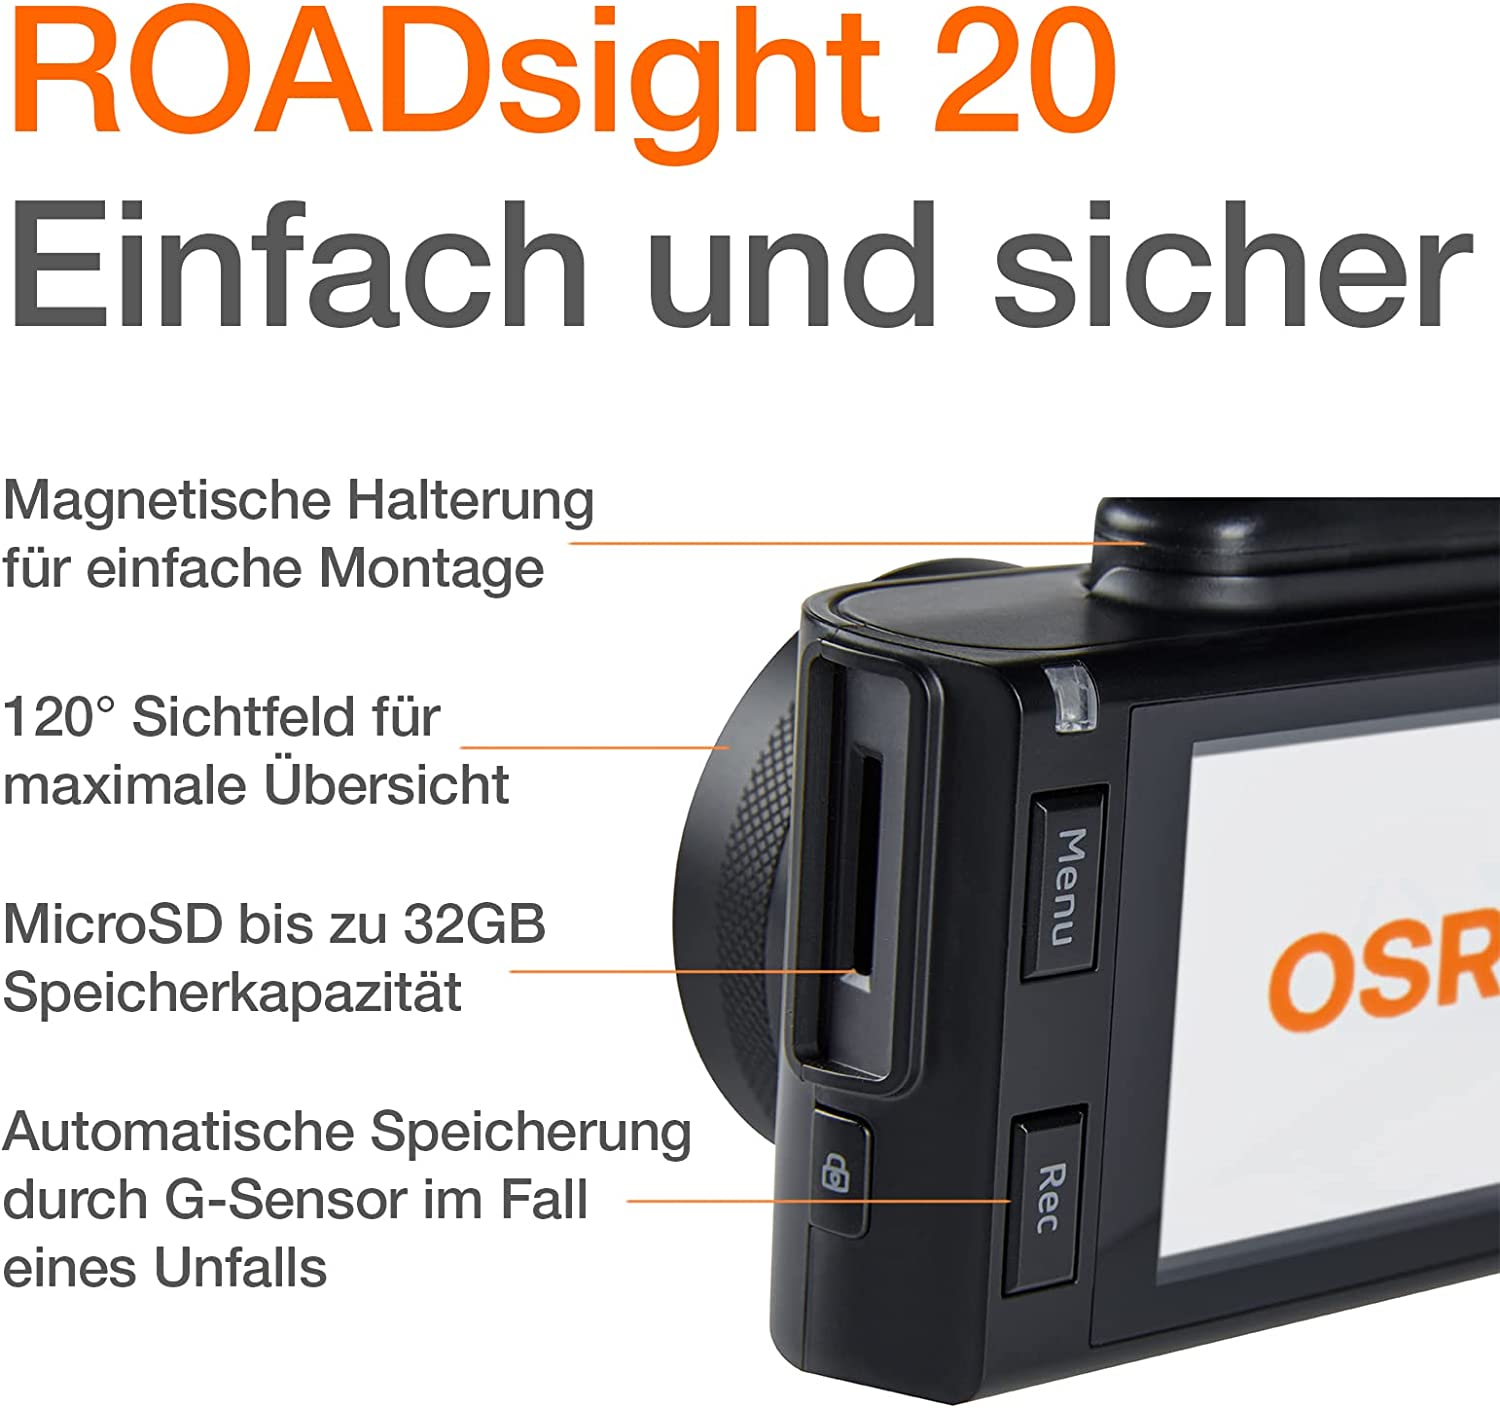 Osram ROADsight 30 Mobile connected Dashcam HD 1080p